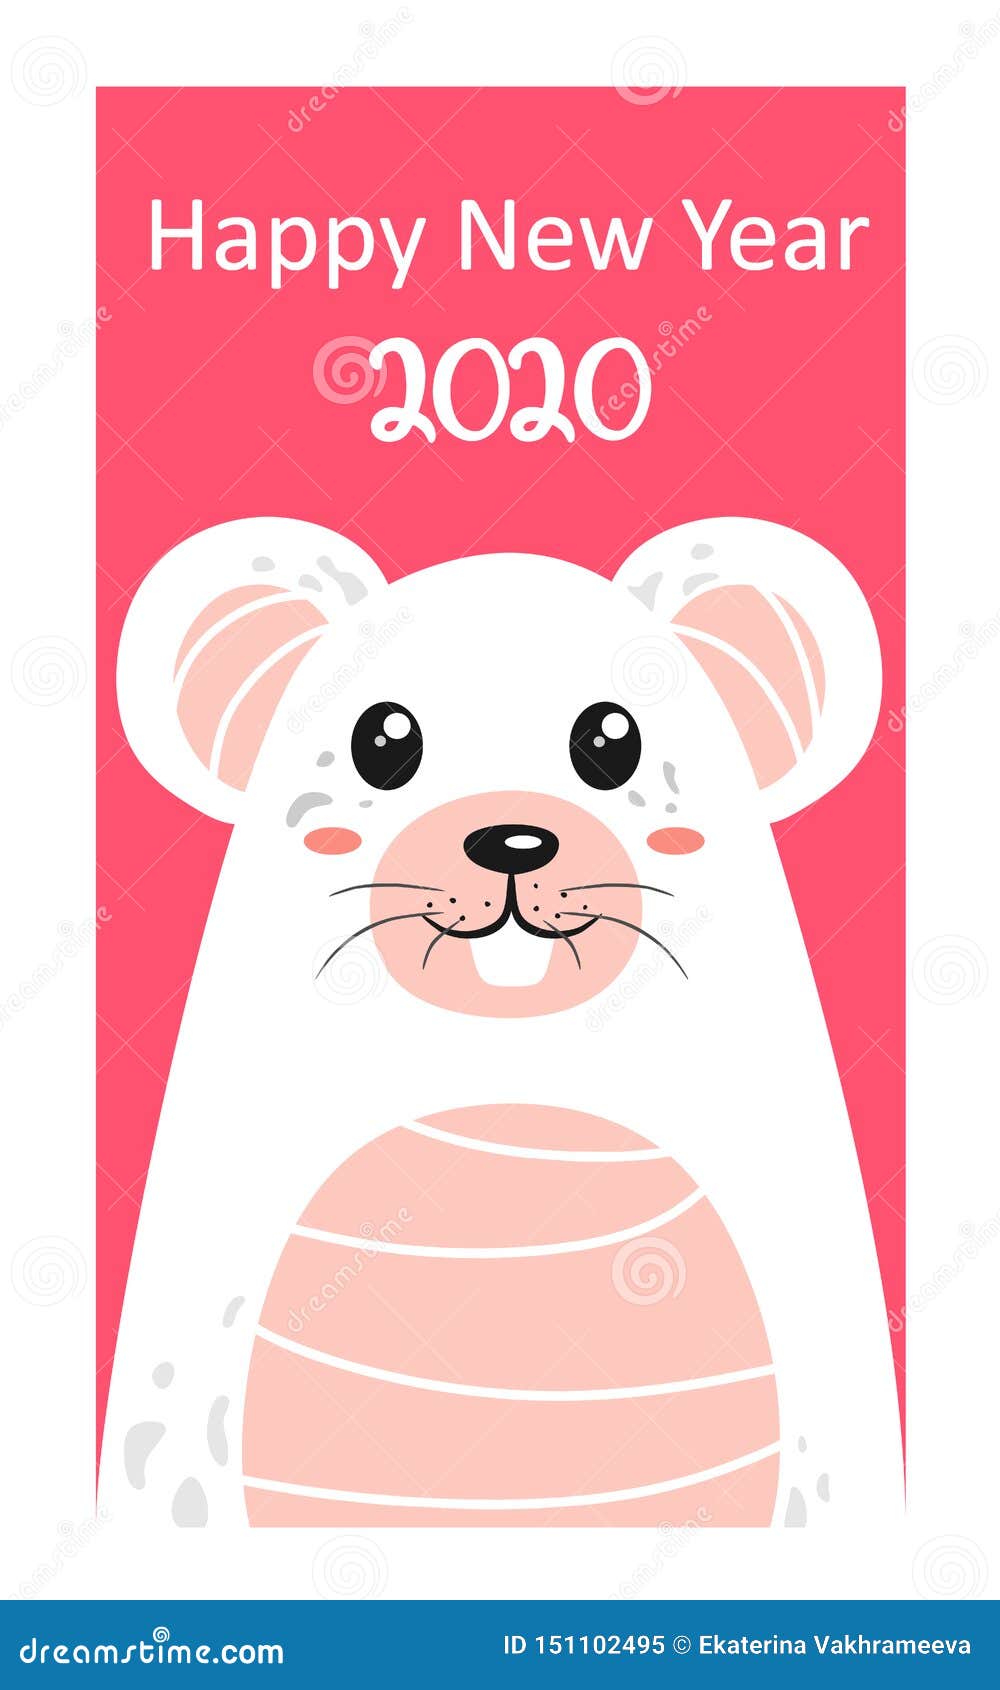 Top 999+ happy new year 2020 cartoon images – Amazing Collection happy new year 2020 cartoon images Full 4K